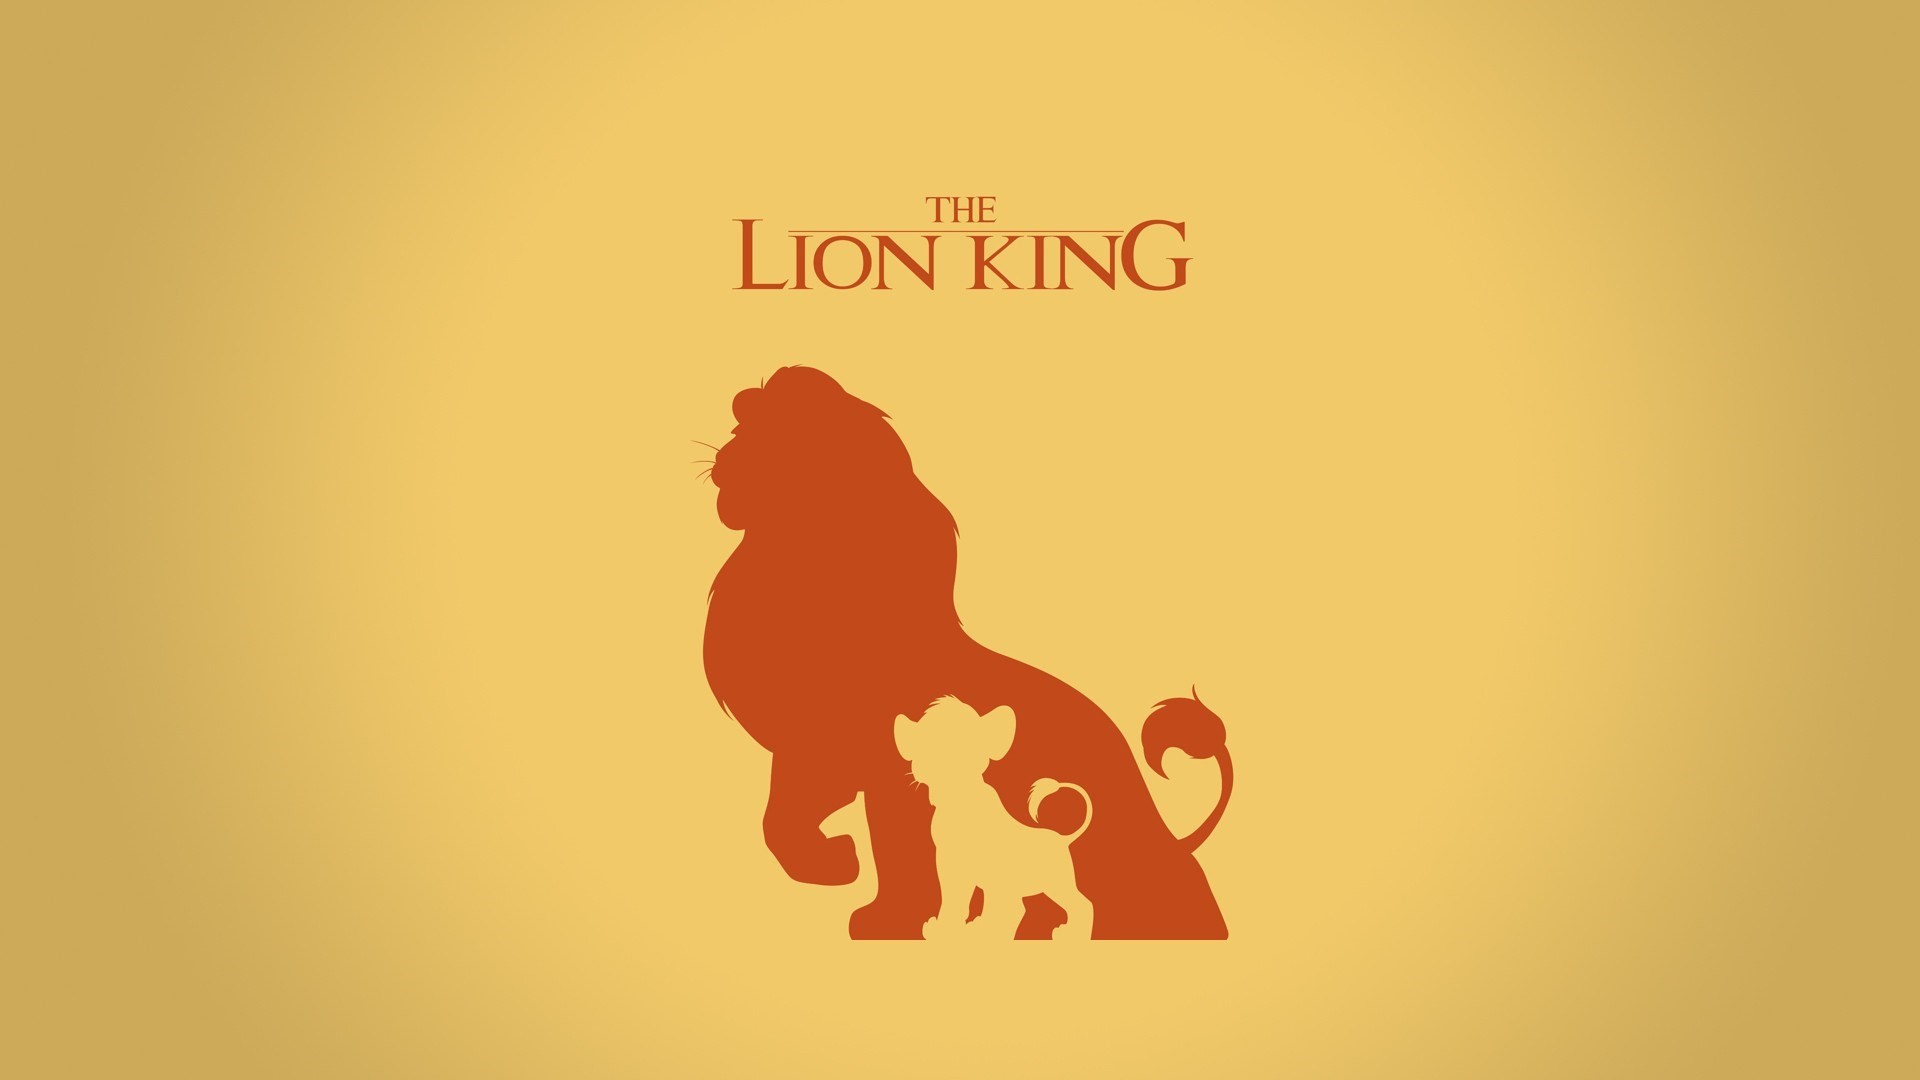 Lion King – The Lion King Wallpaper 37324599 – Fanpop